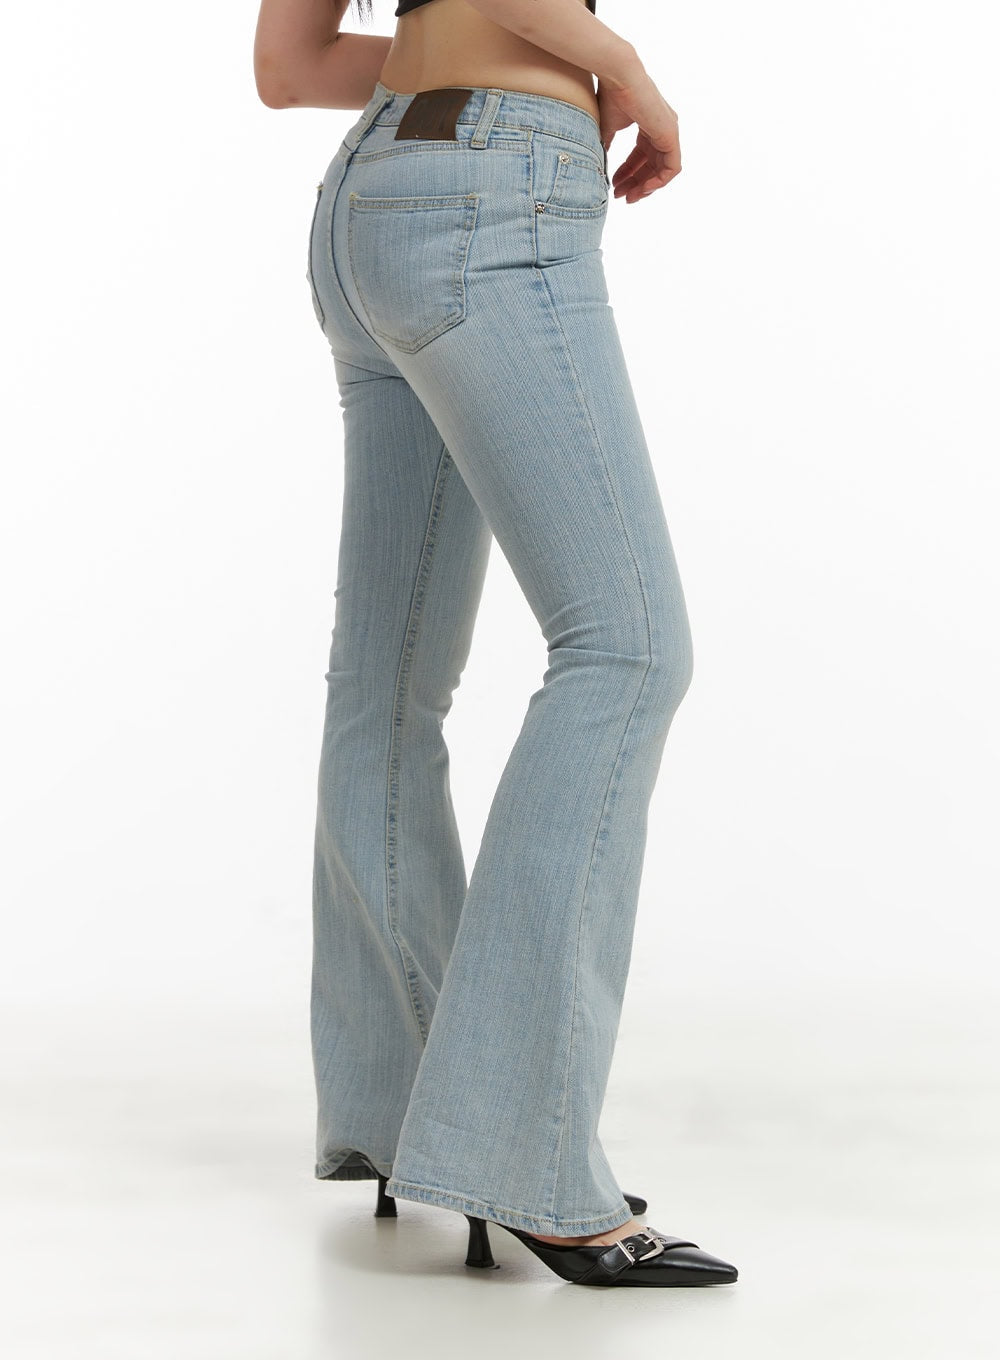 low-waist-slim-fit-bootcut-jeans-cu424